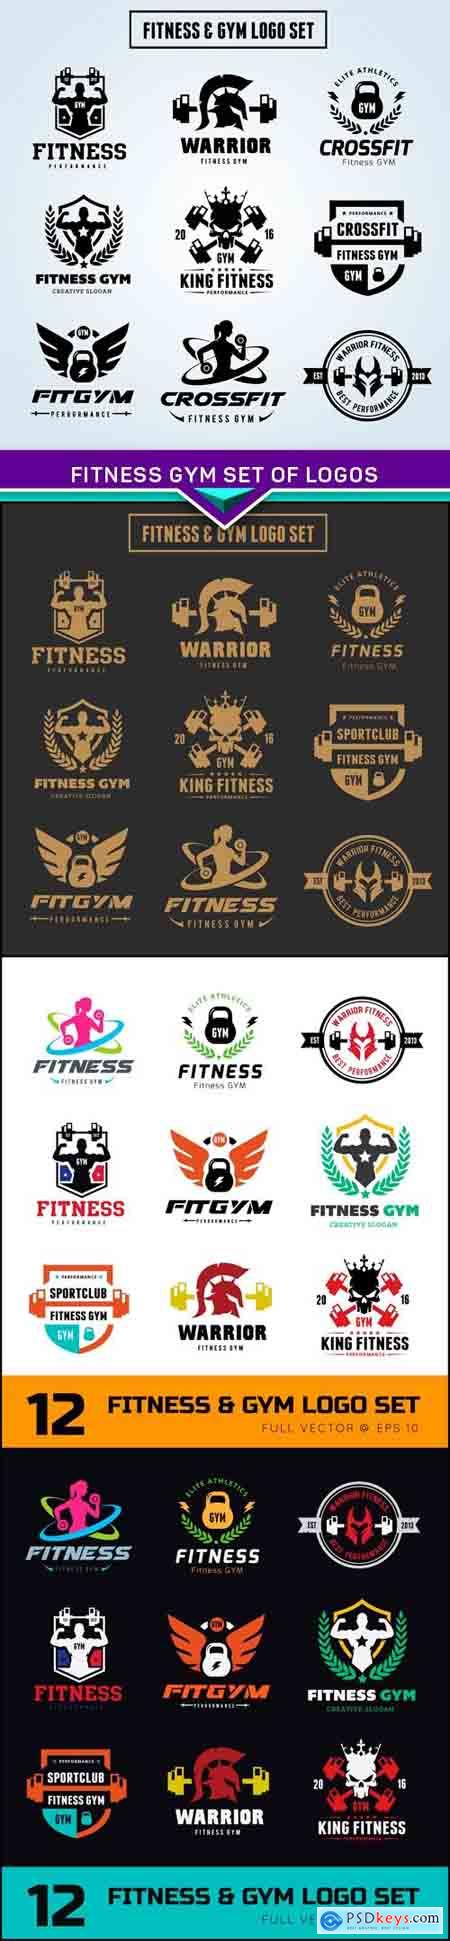 Fitness gym set of logos 4X EPS